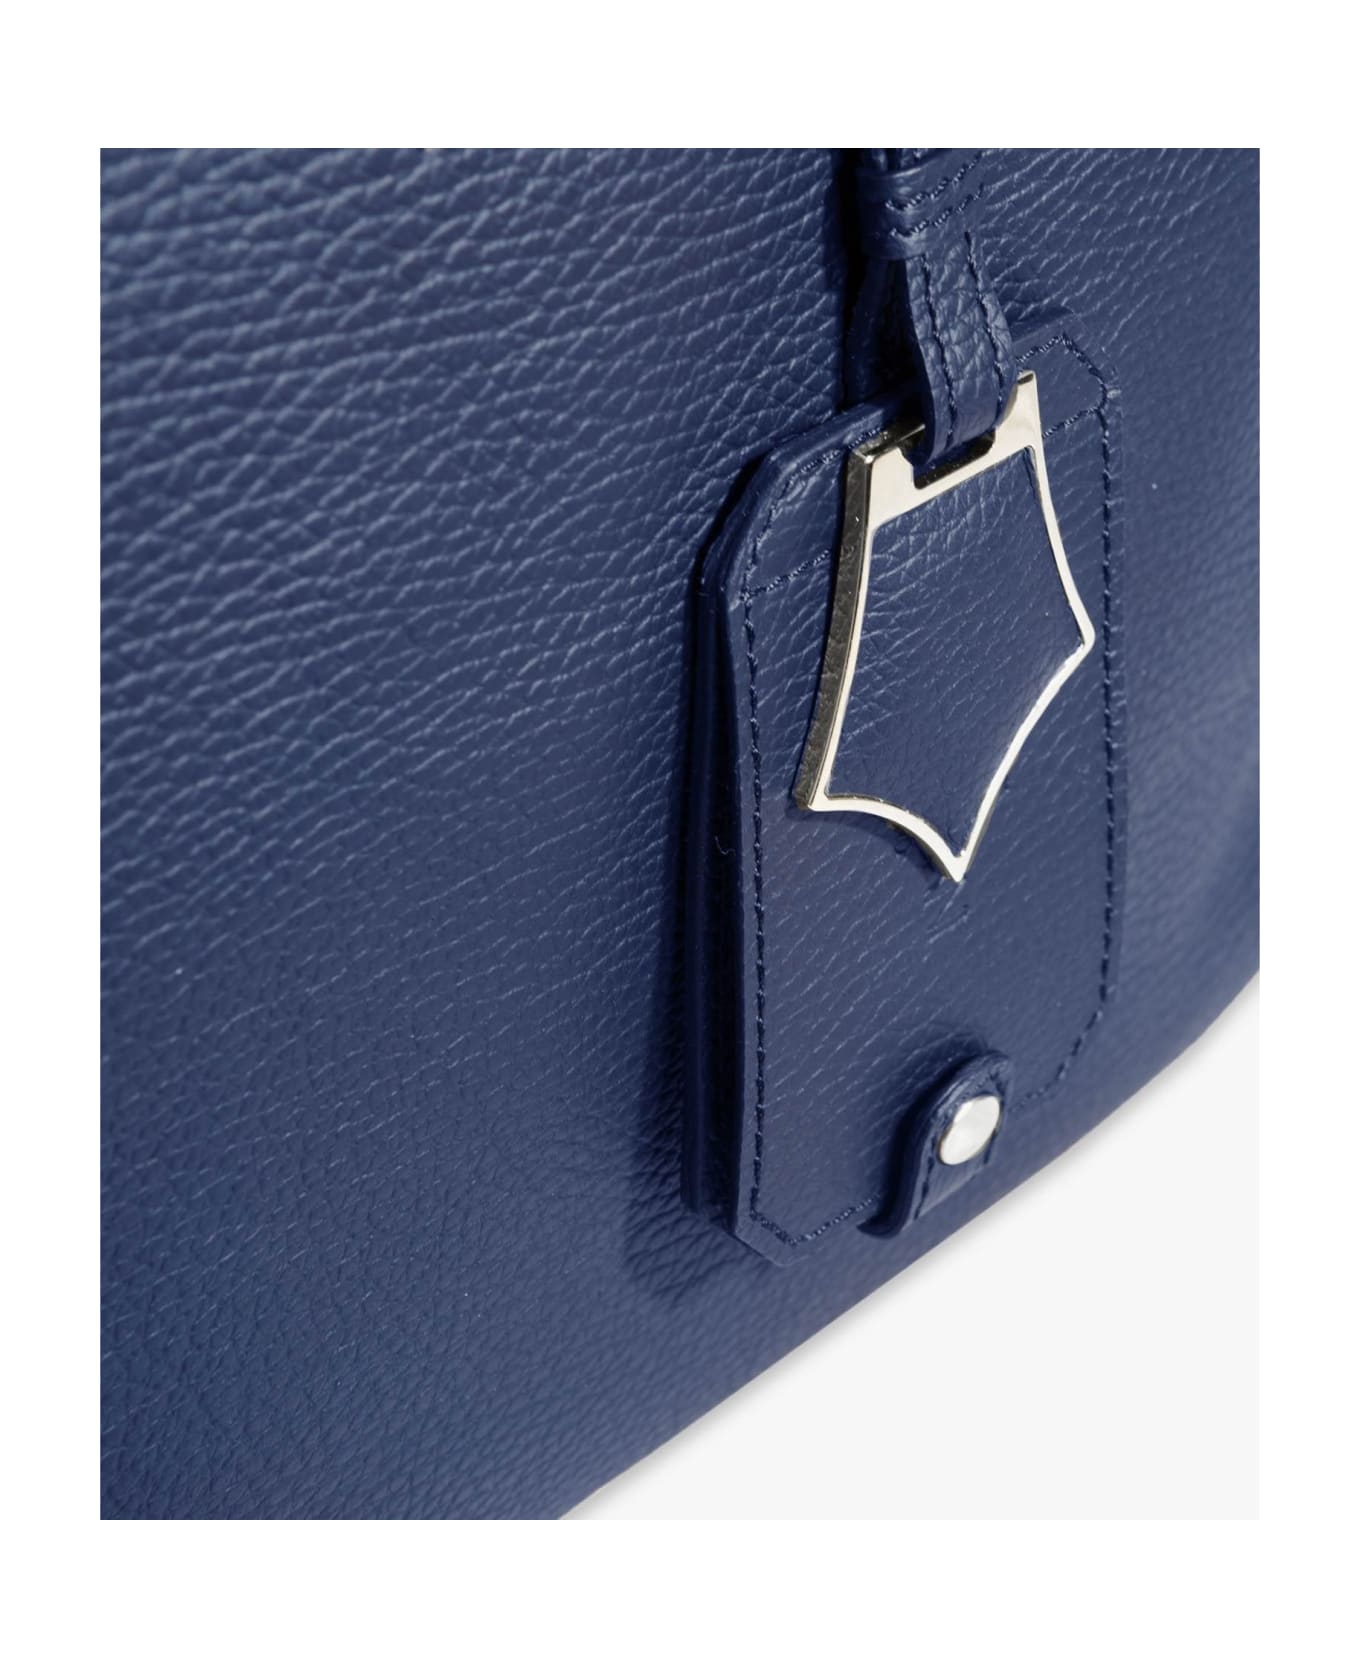 Larusmiani Briefcase 'piazza Affari' Luggage - Blue トラベルバッグ